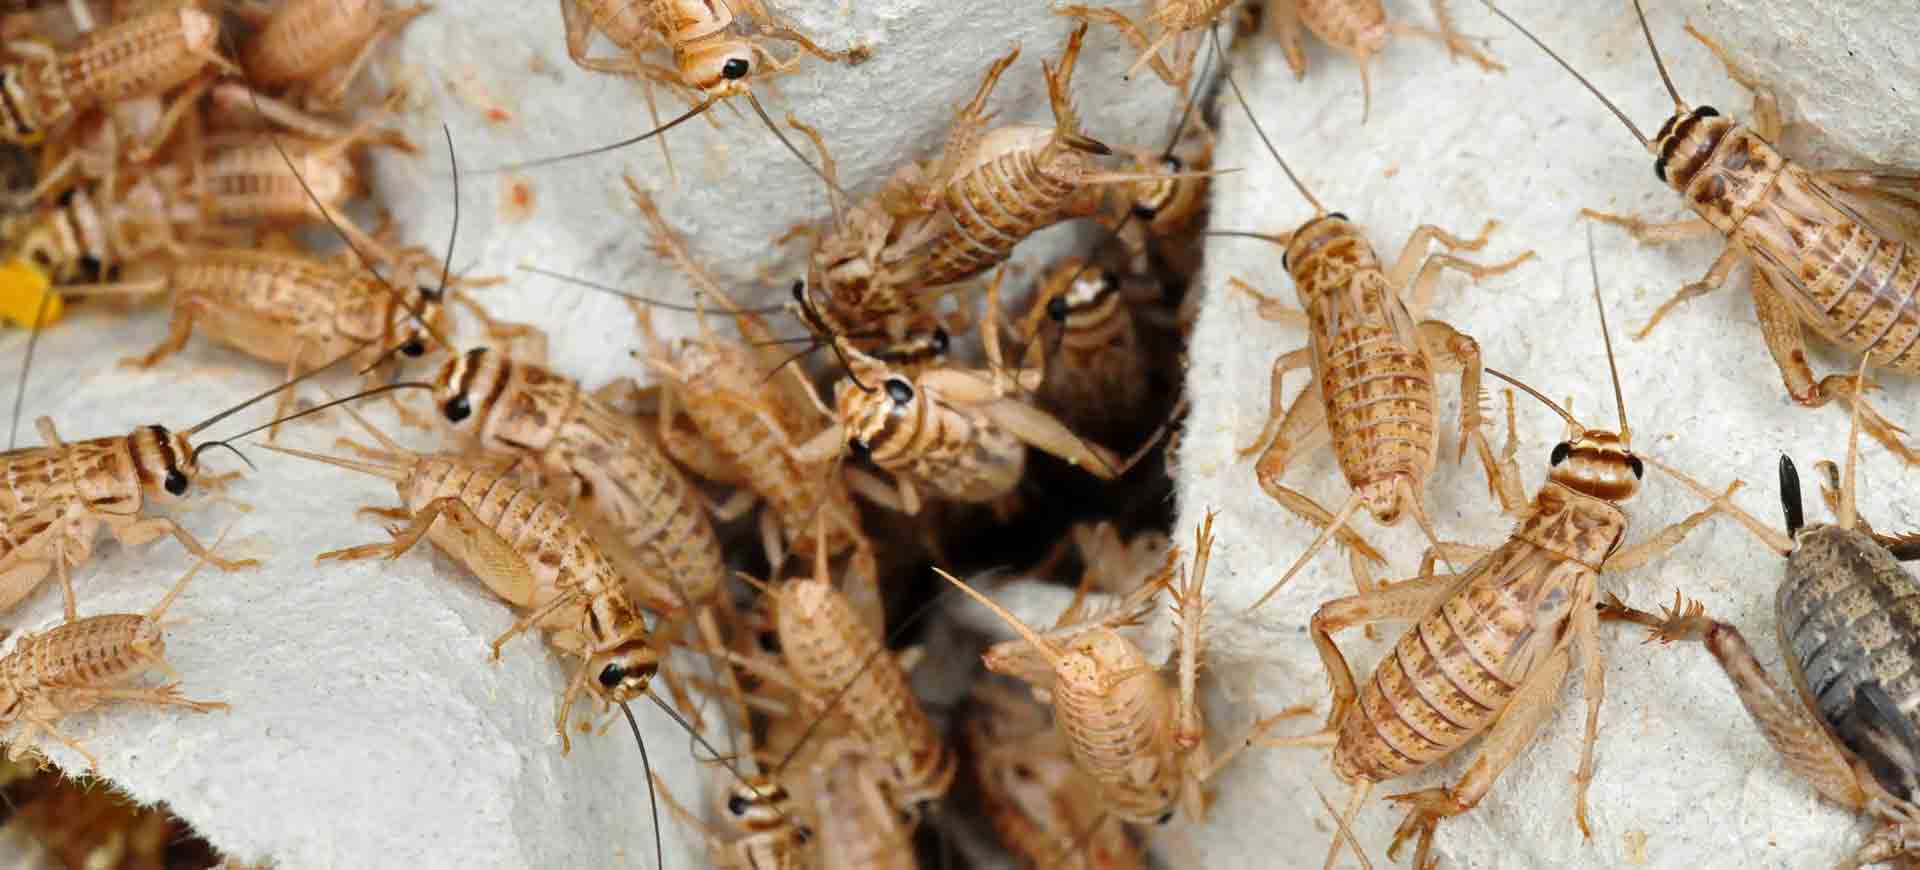 cricket pest control carmel valley